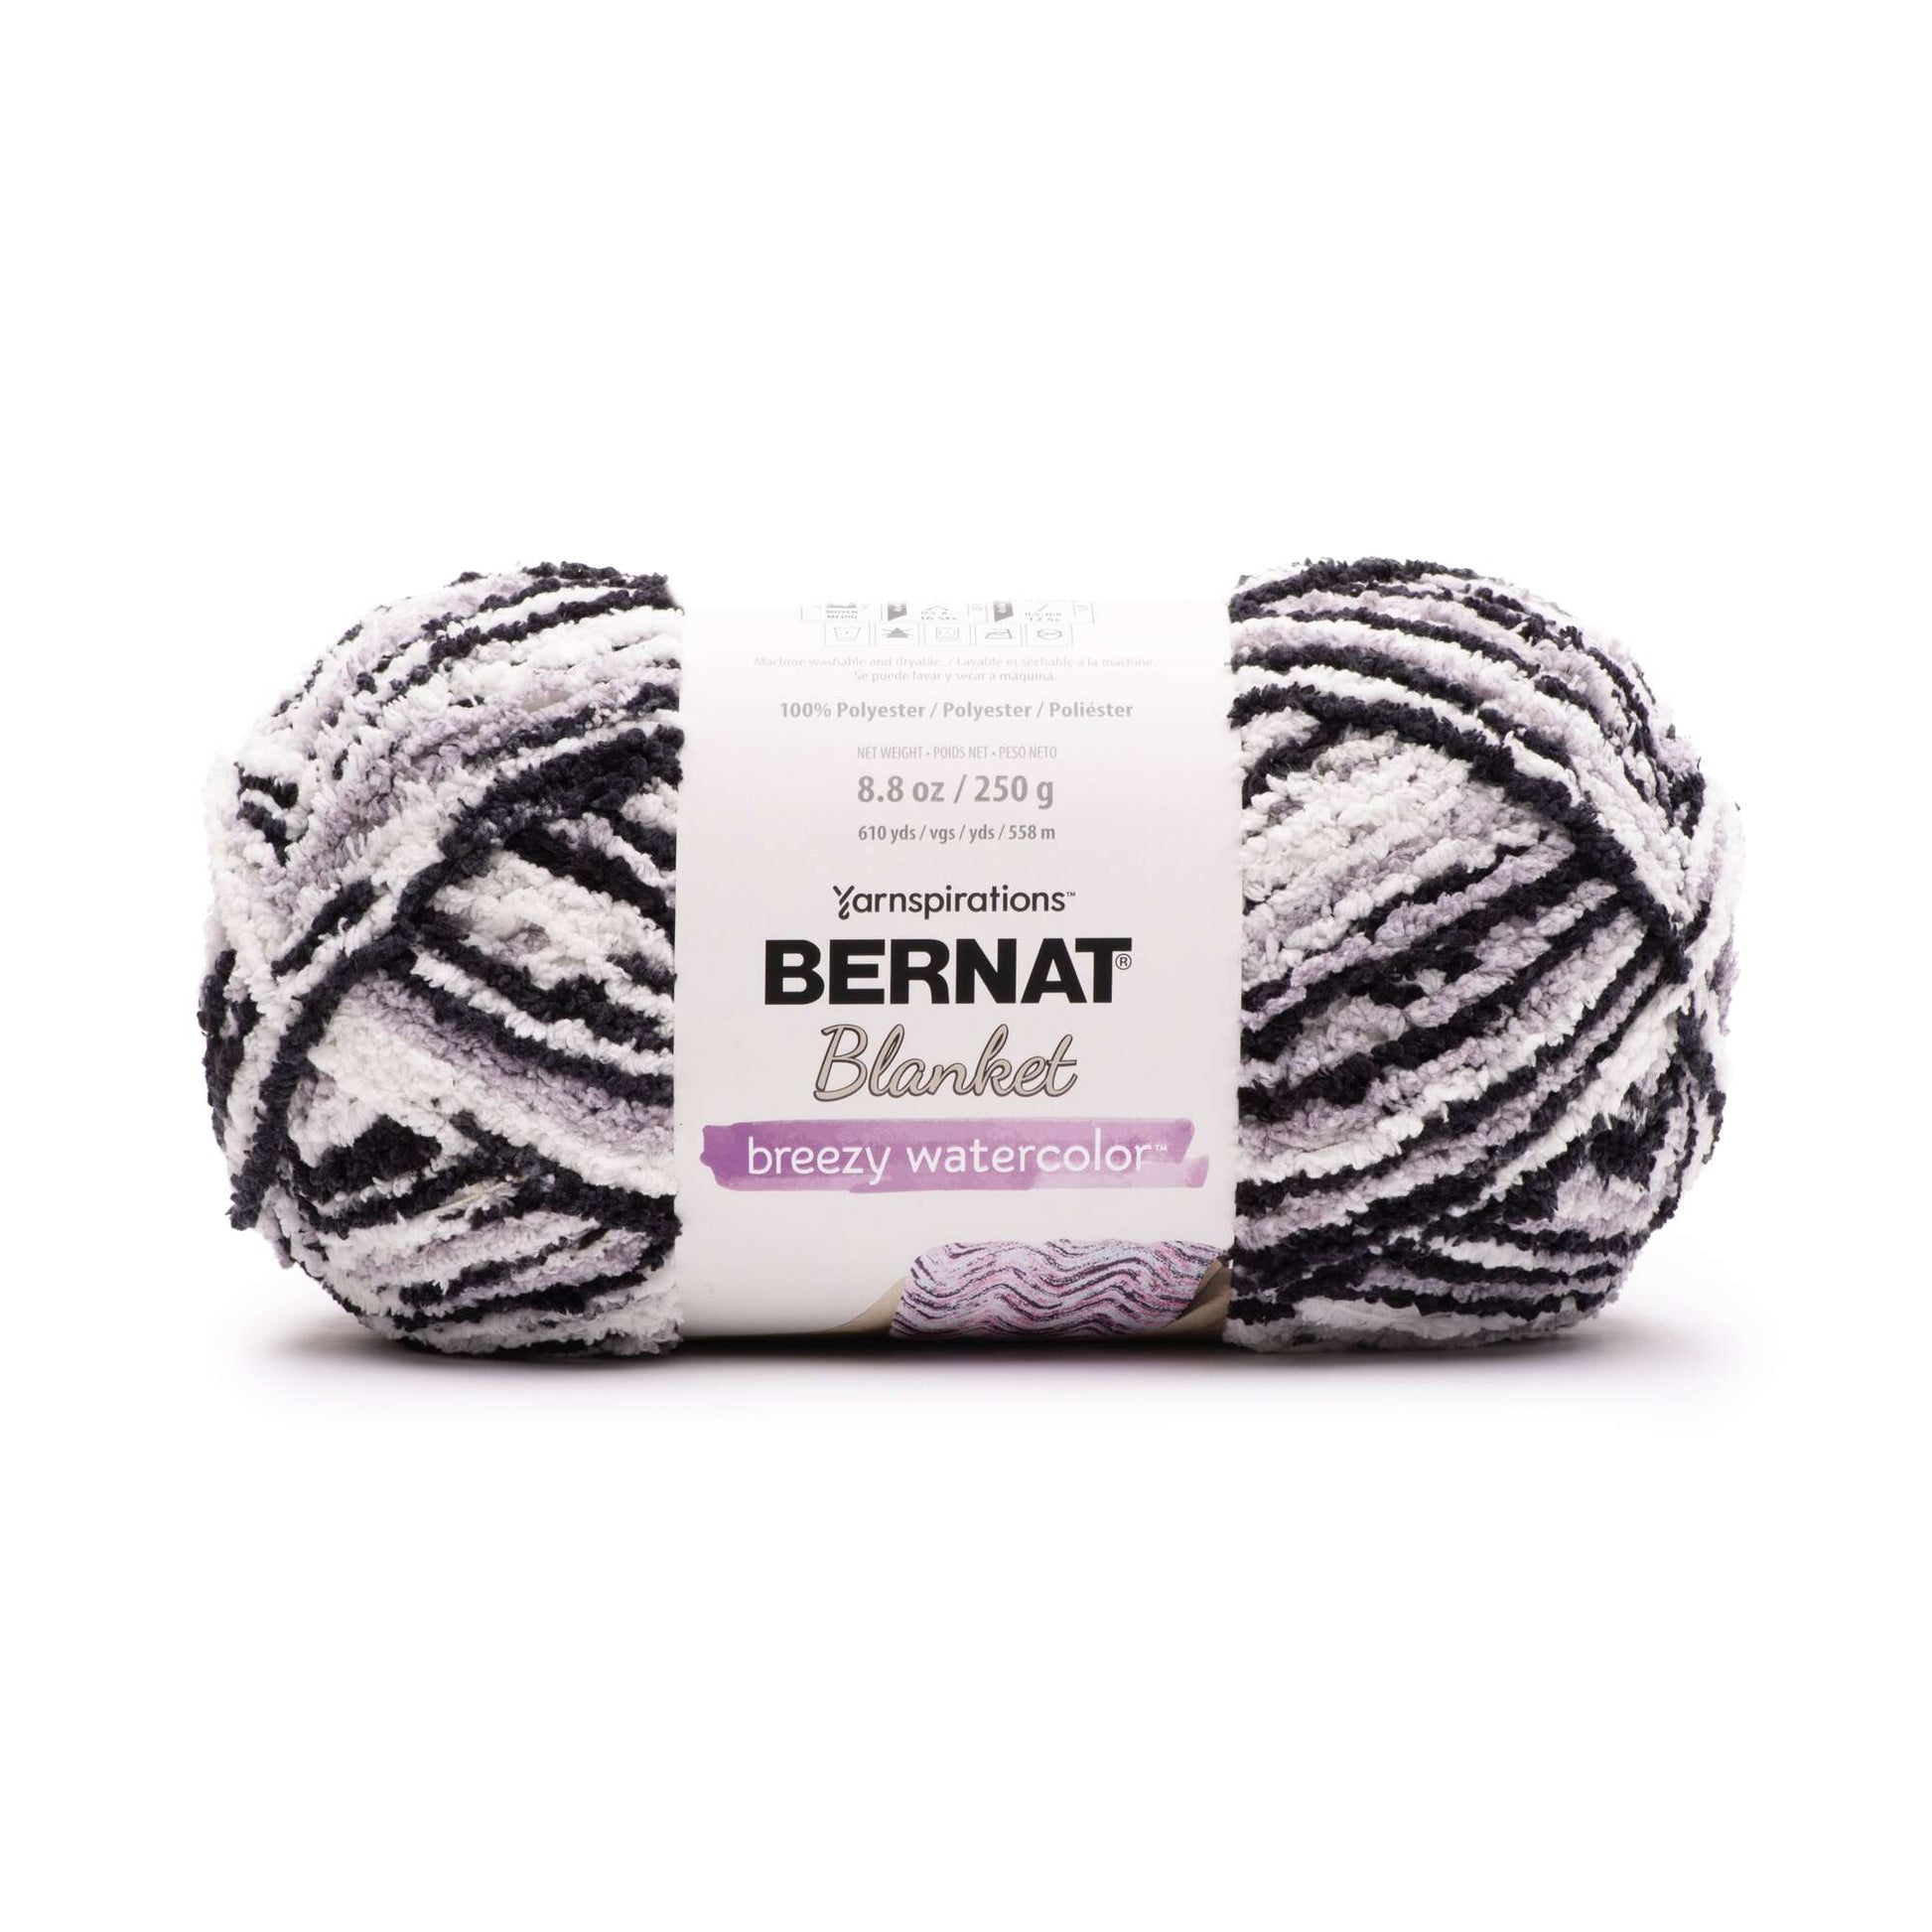 Bernat Blanket Breezy Watercolor Yarn - Discontinued Shades